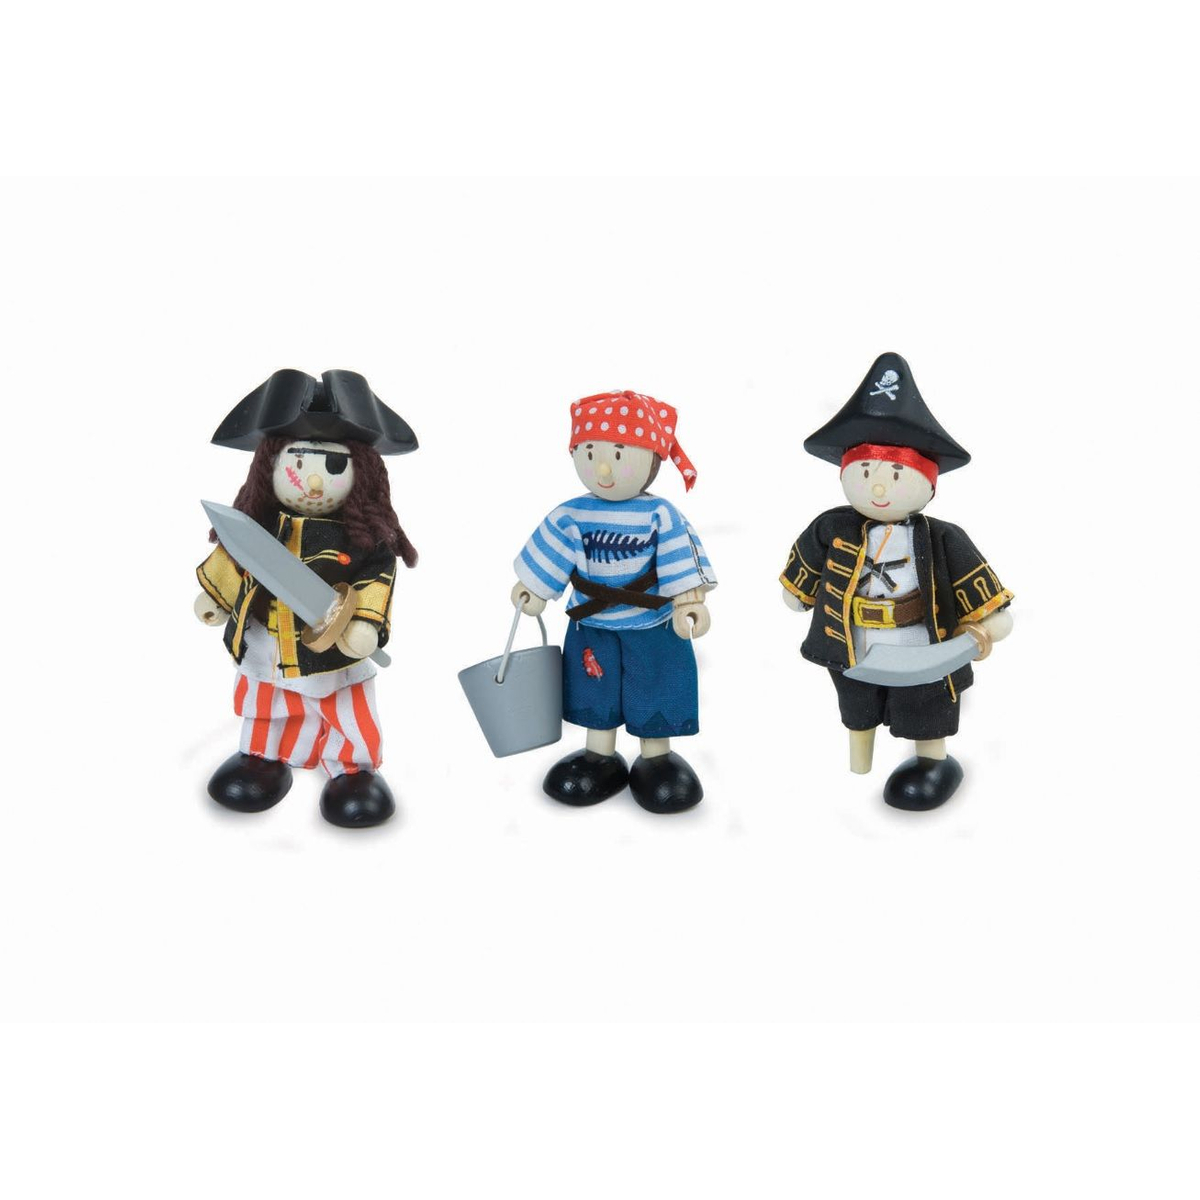 Le Toy Van Piraten set - Poppen